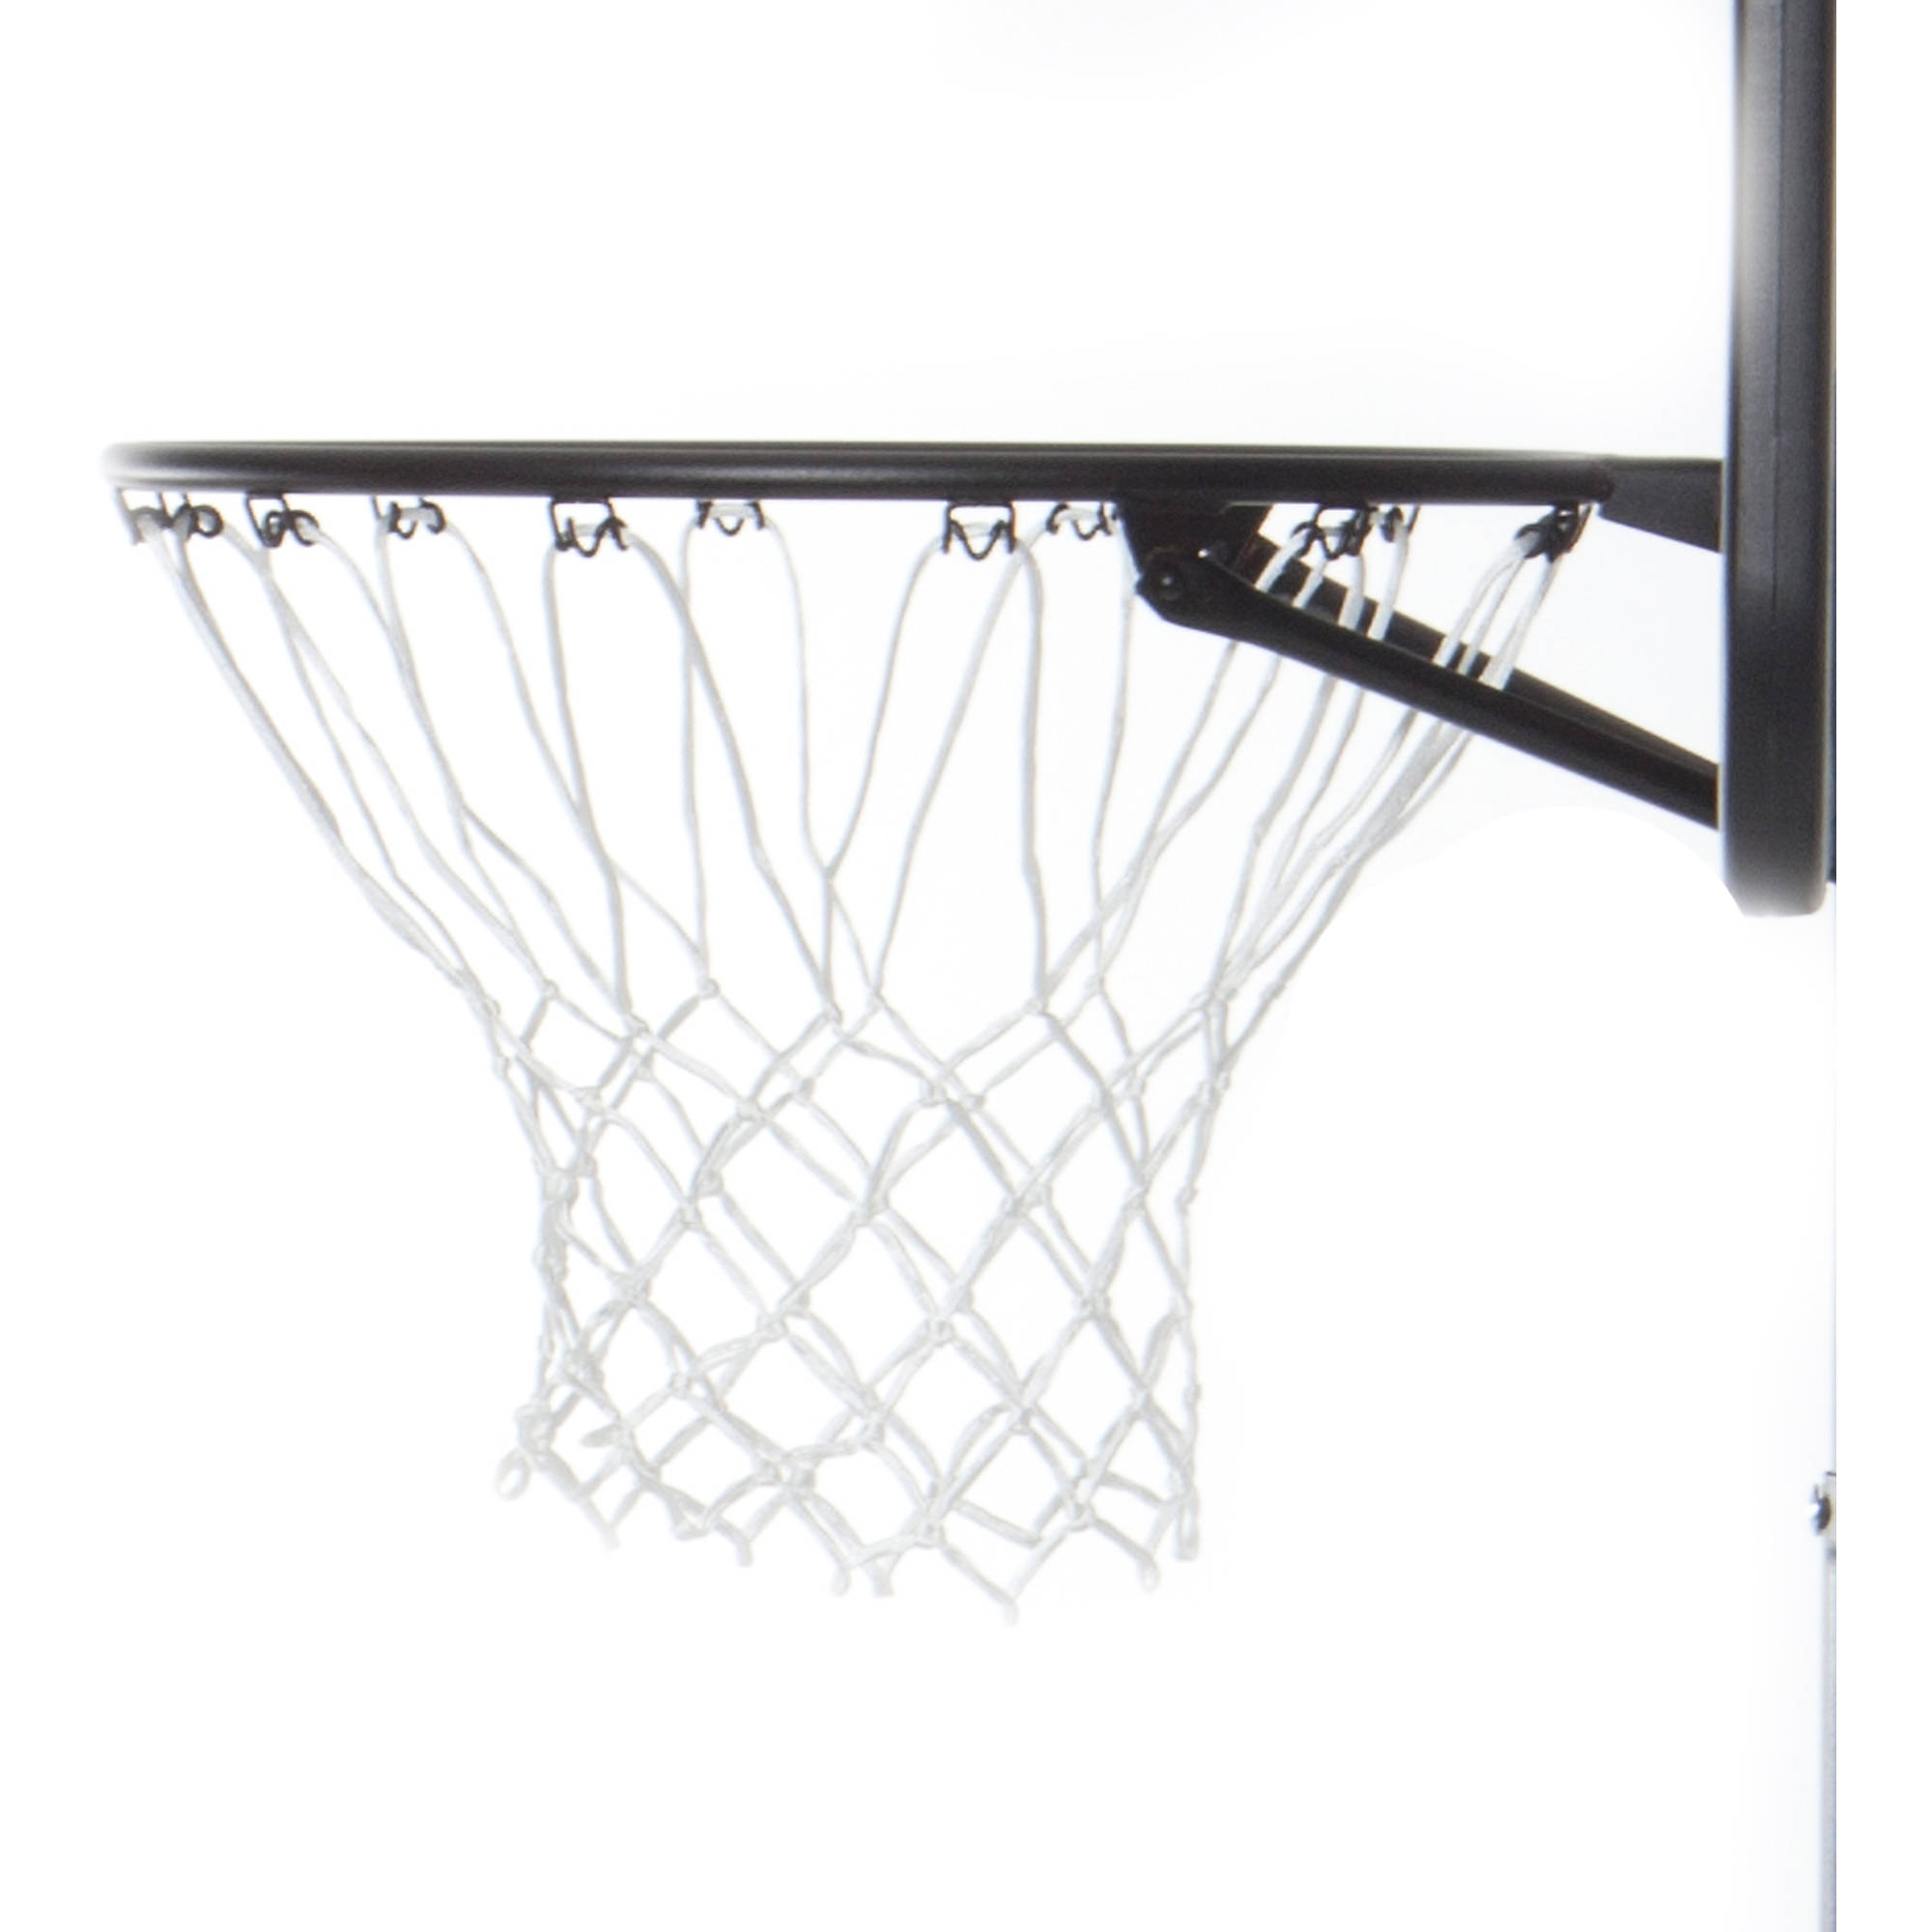 Lifetime 44" Portable Basketball System, 1263 - image 5 of 6